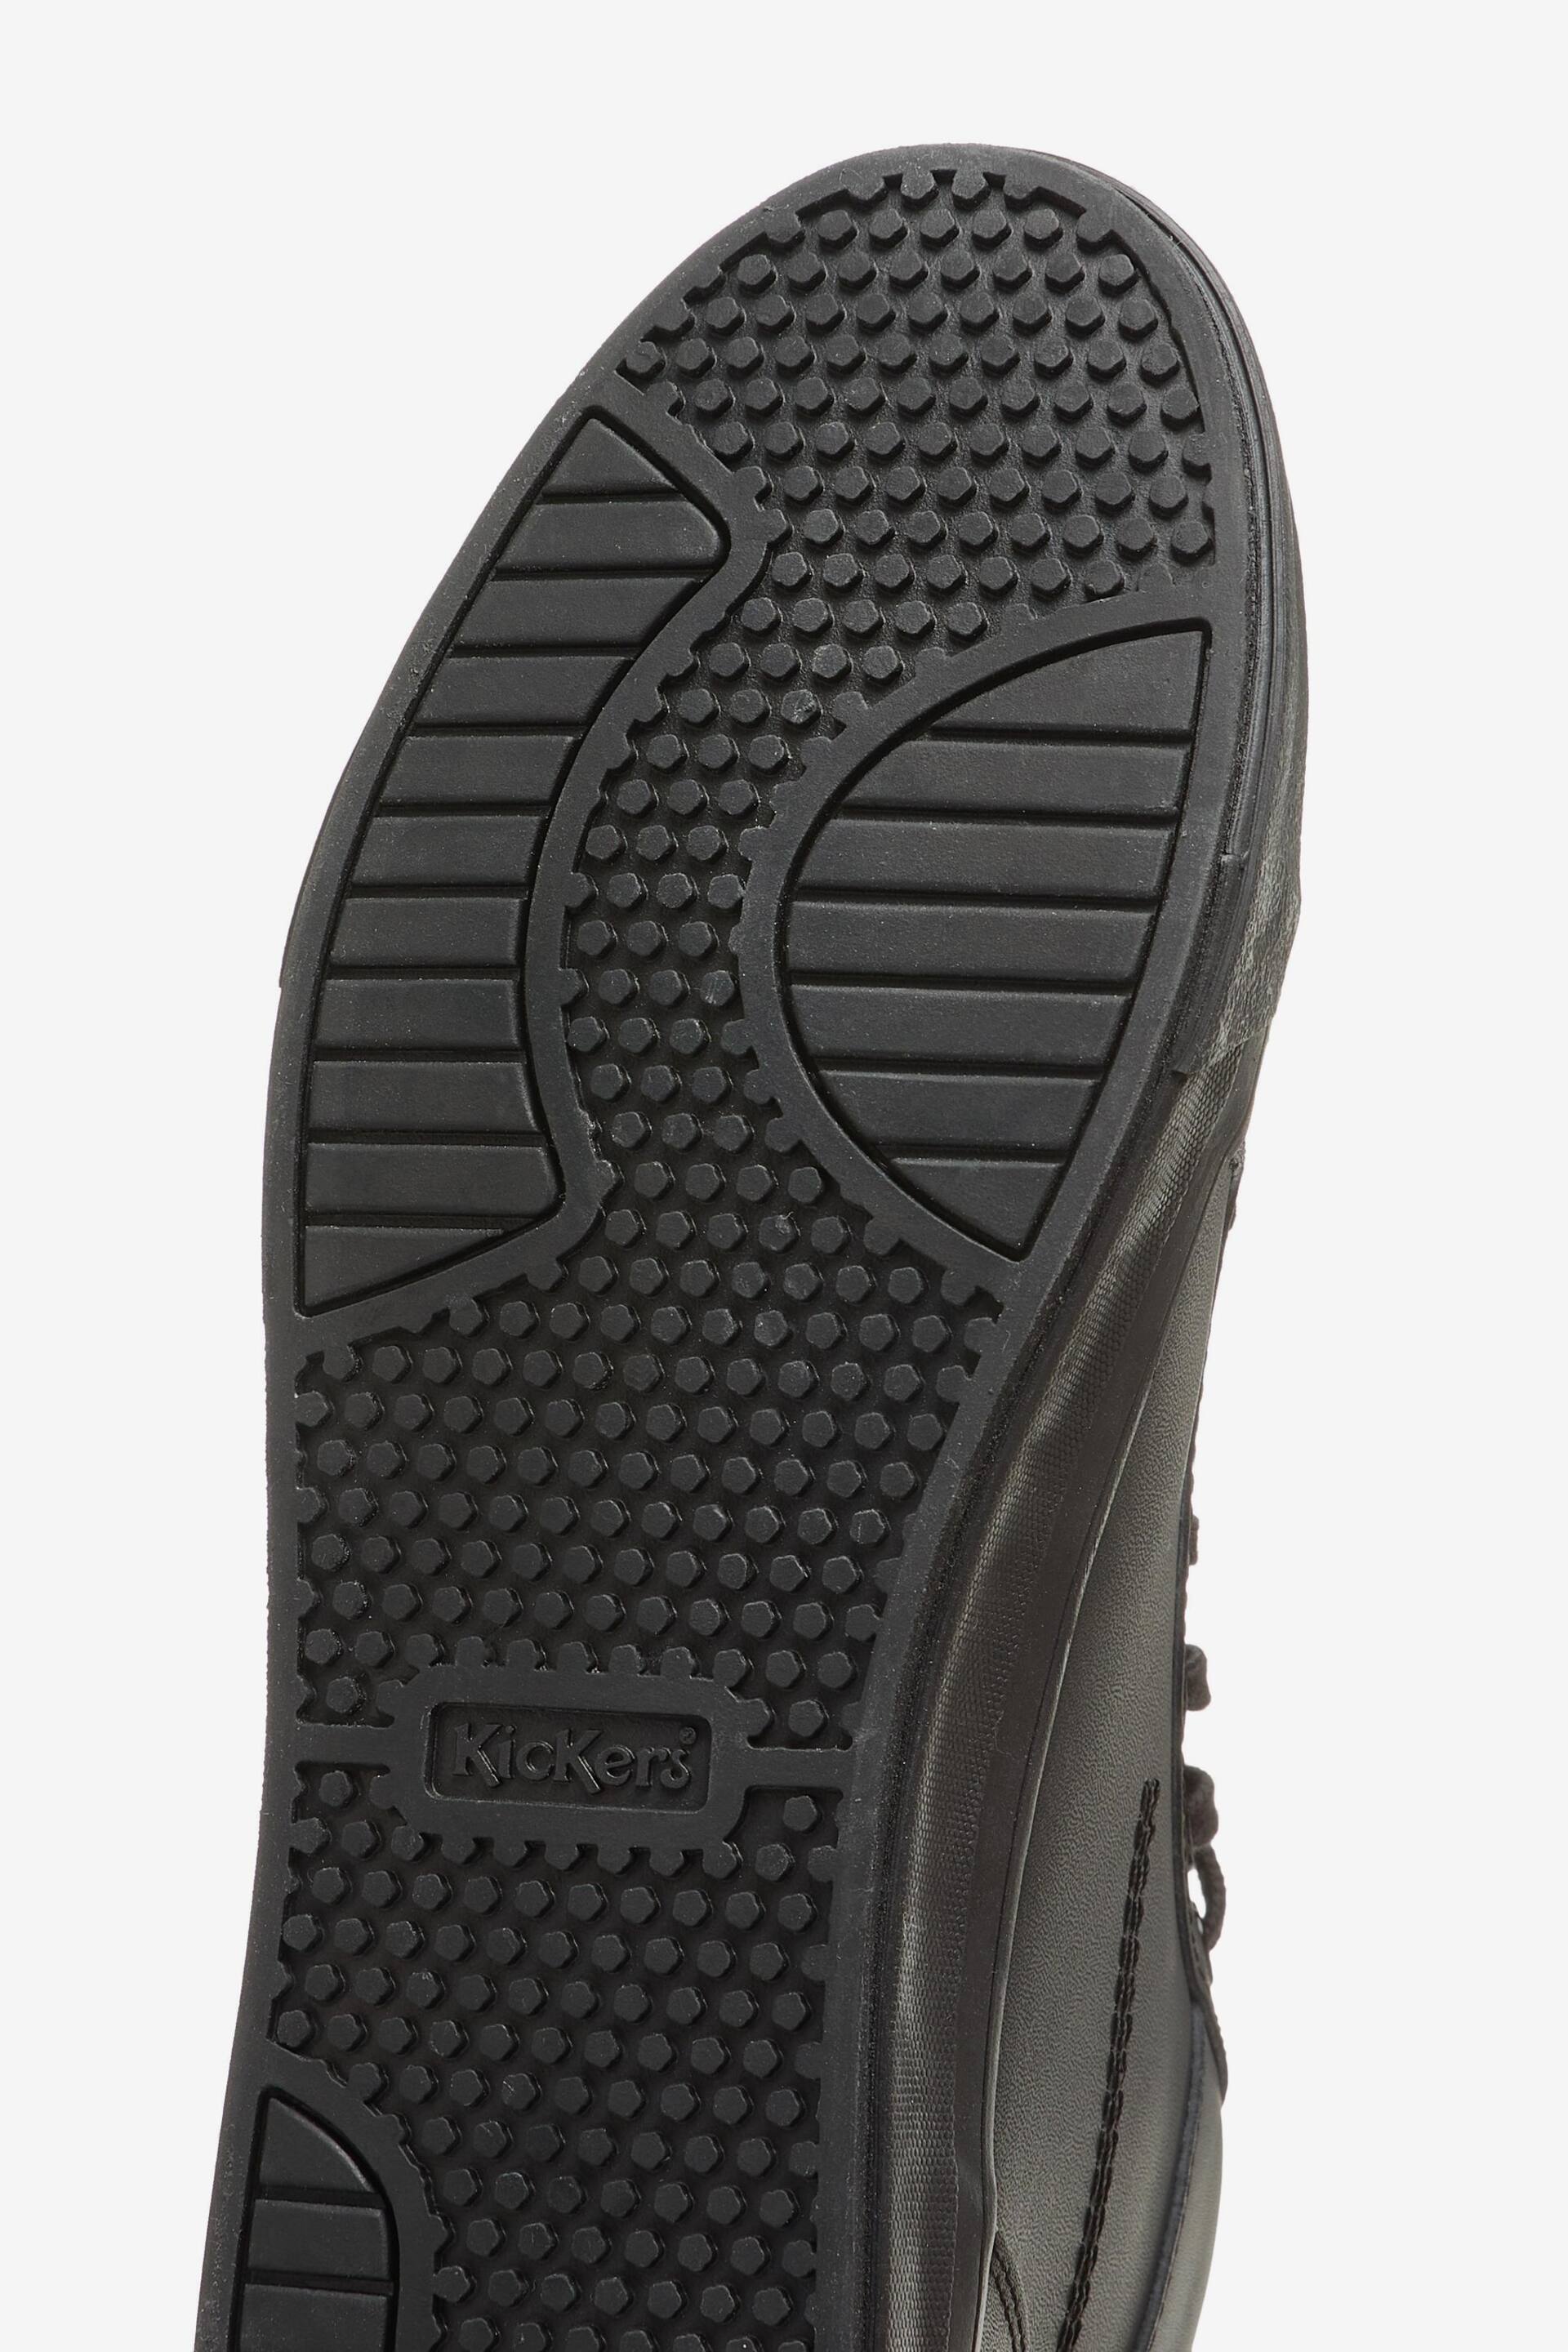 Kickers Black Tovni Hi Leather Shoes - Image 4 of 6